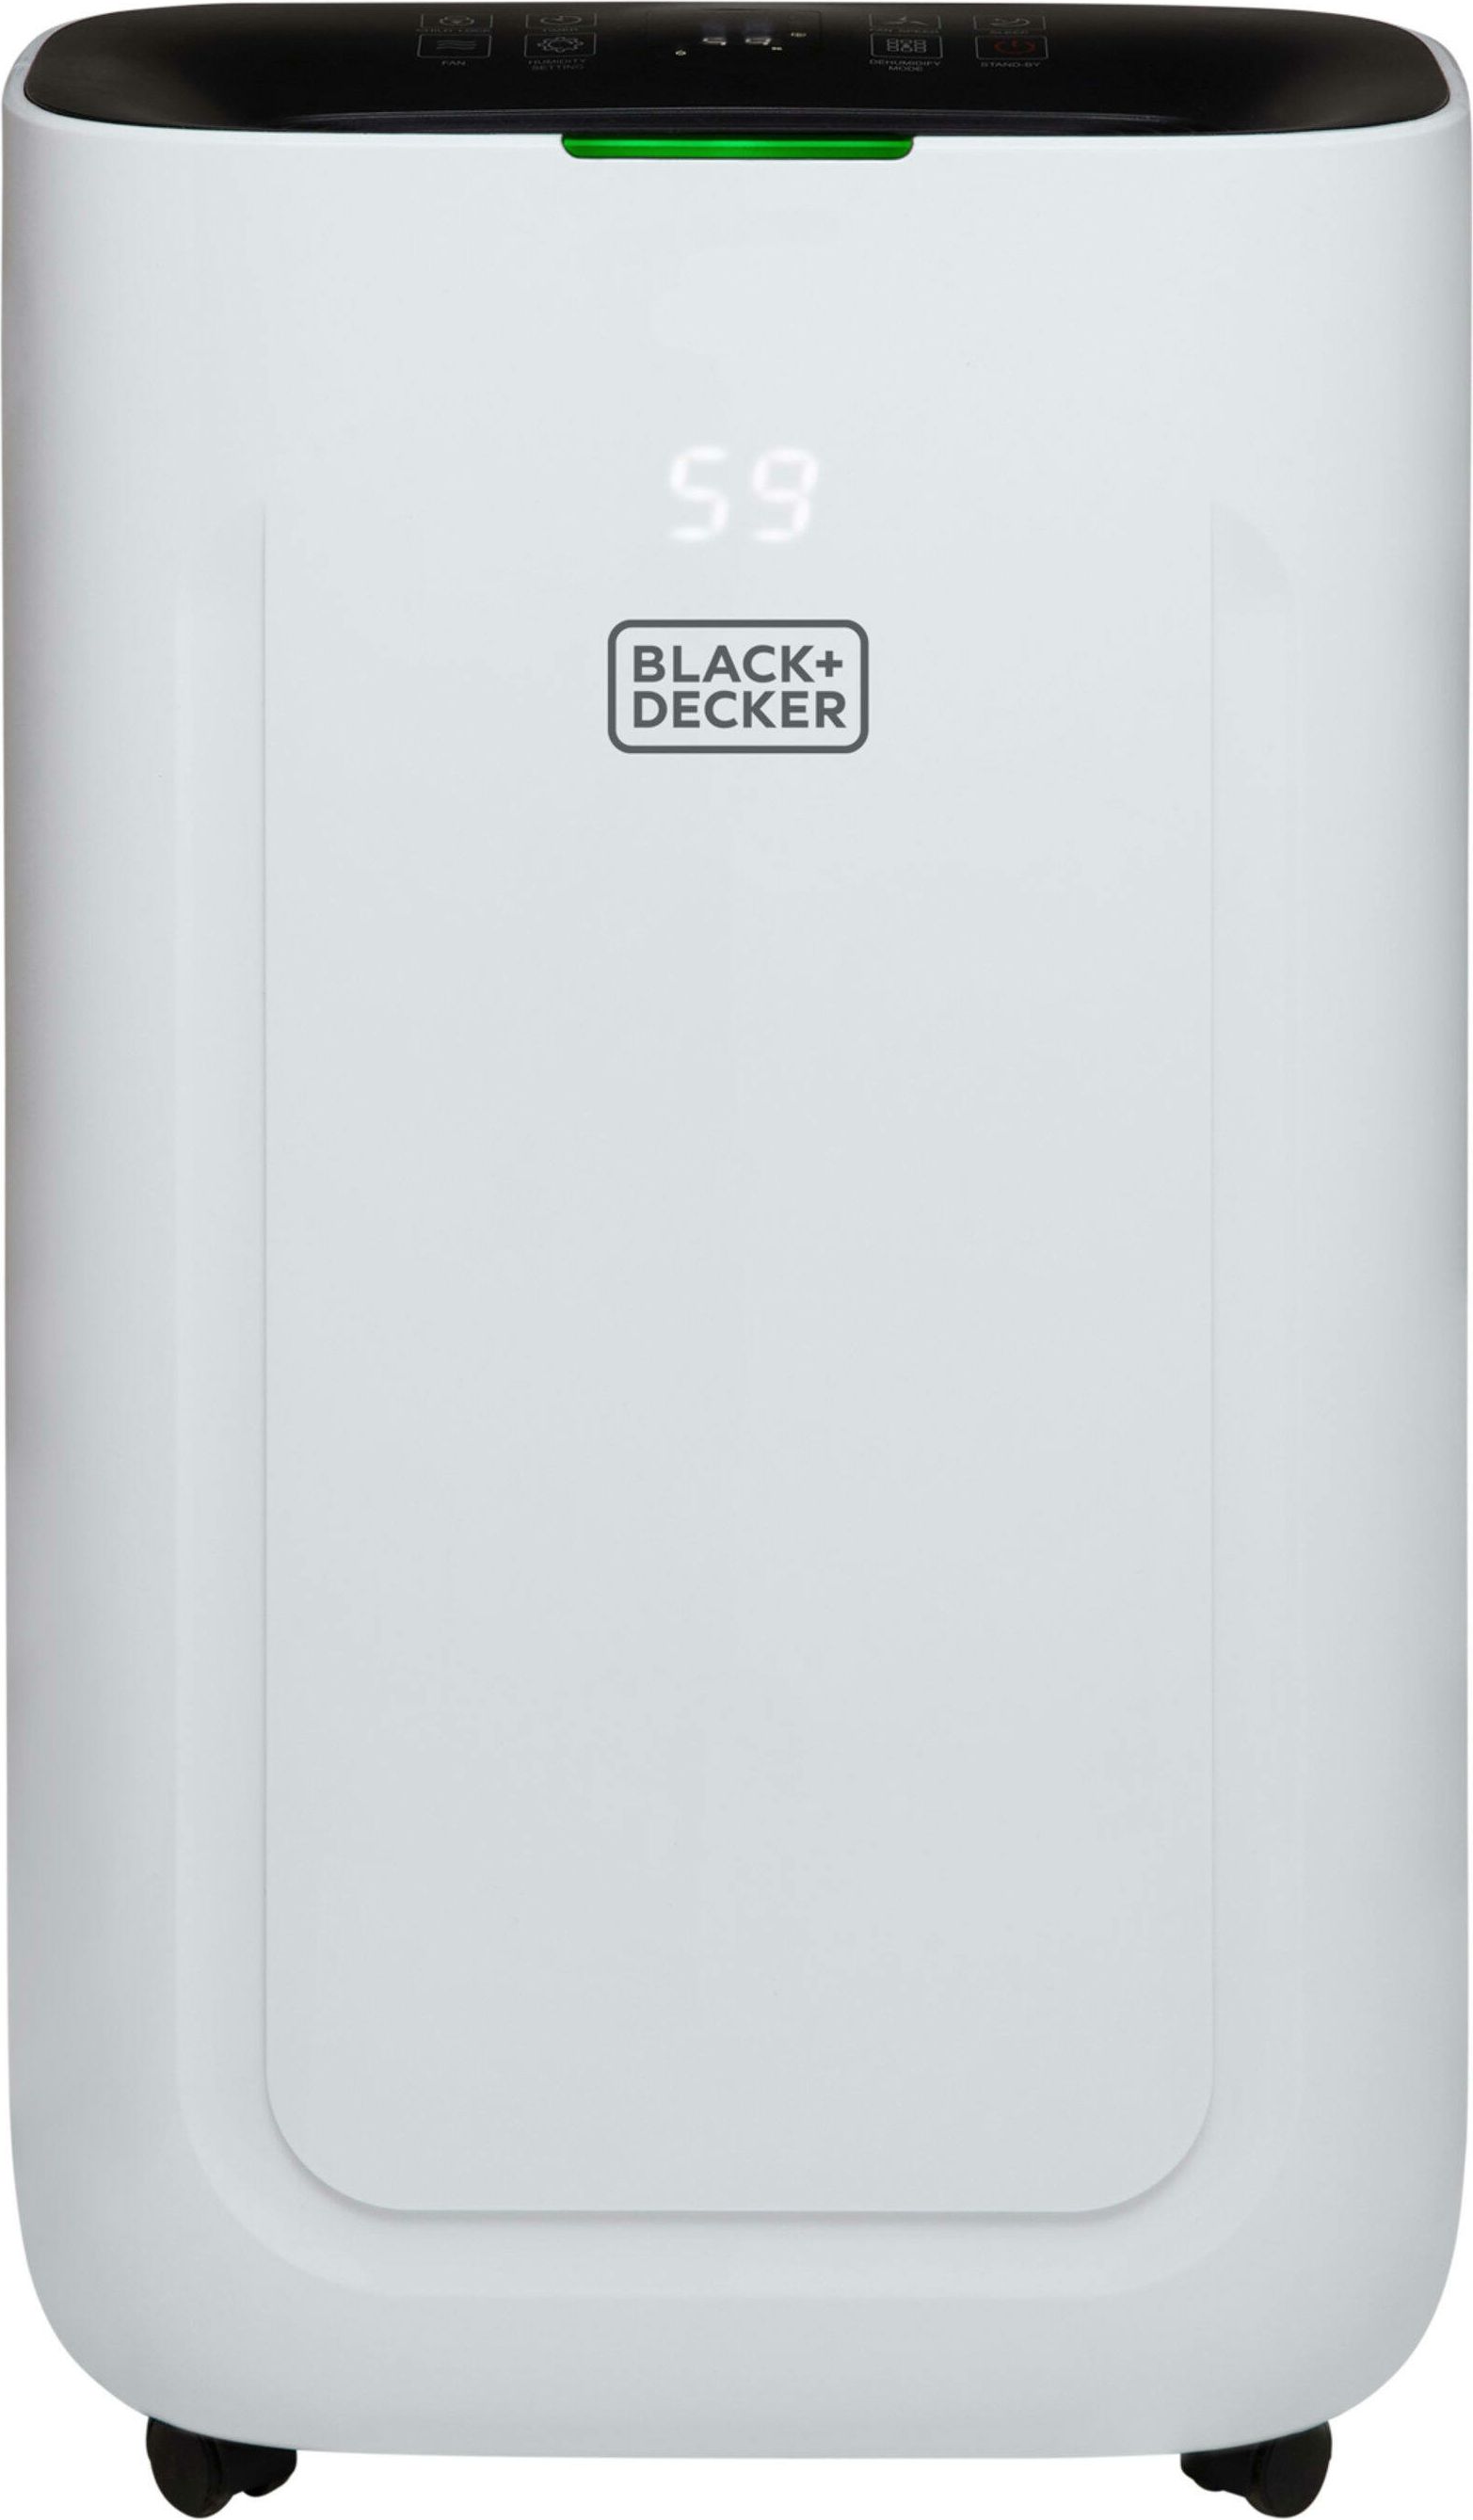 Black + Decker Smart BXEH60014GB Dehumidifier - White, White